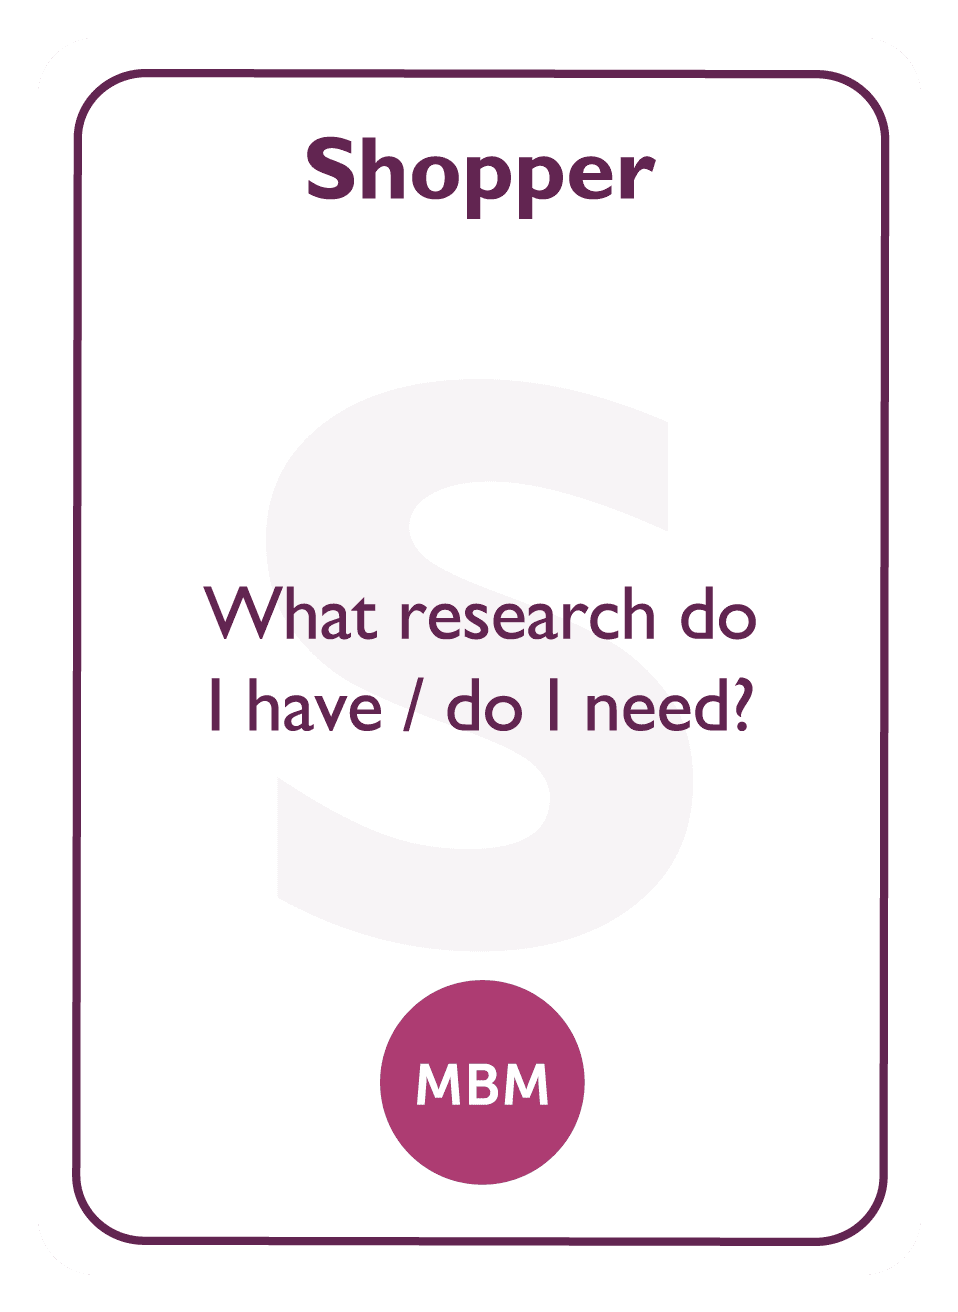 Negotiation coaching card titled Shopper